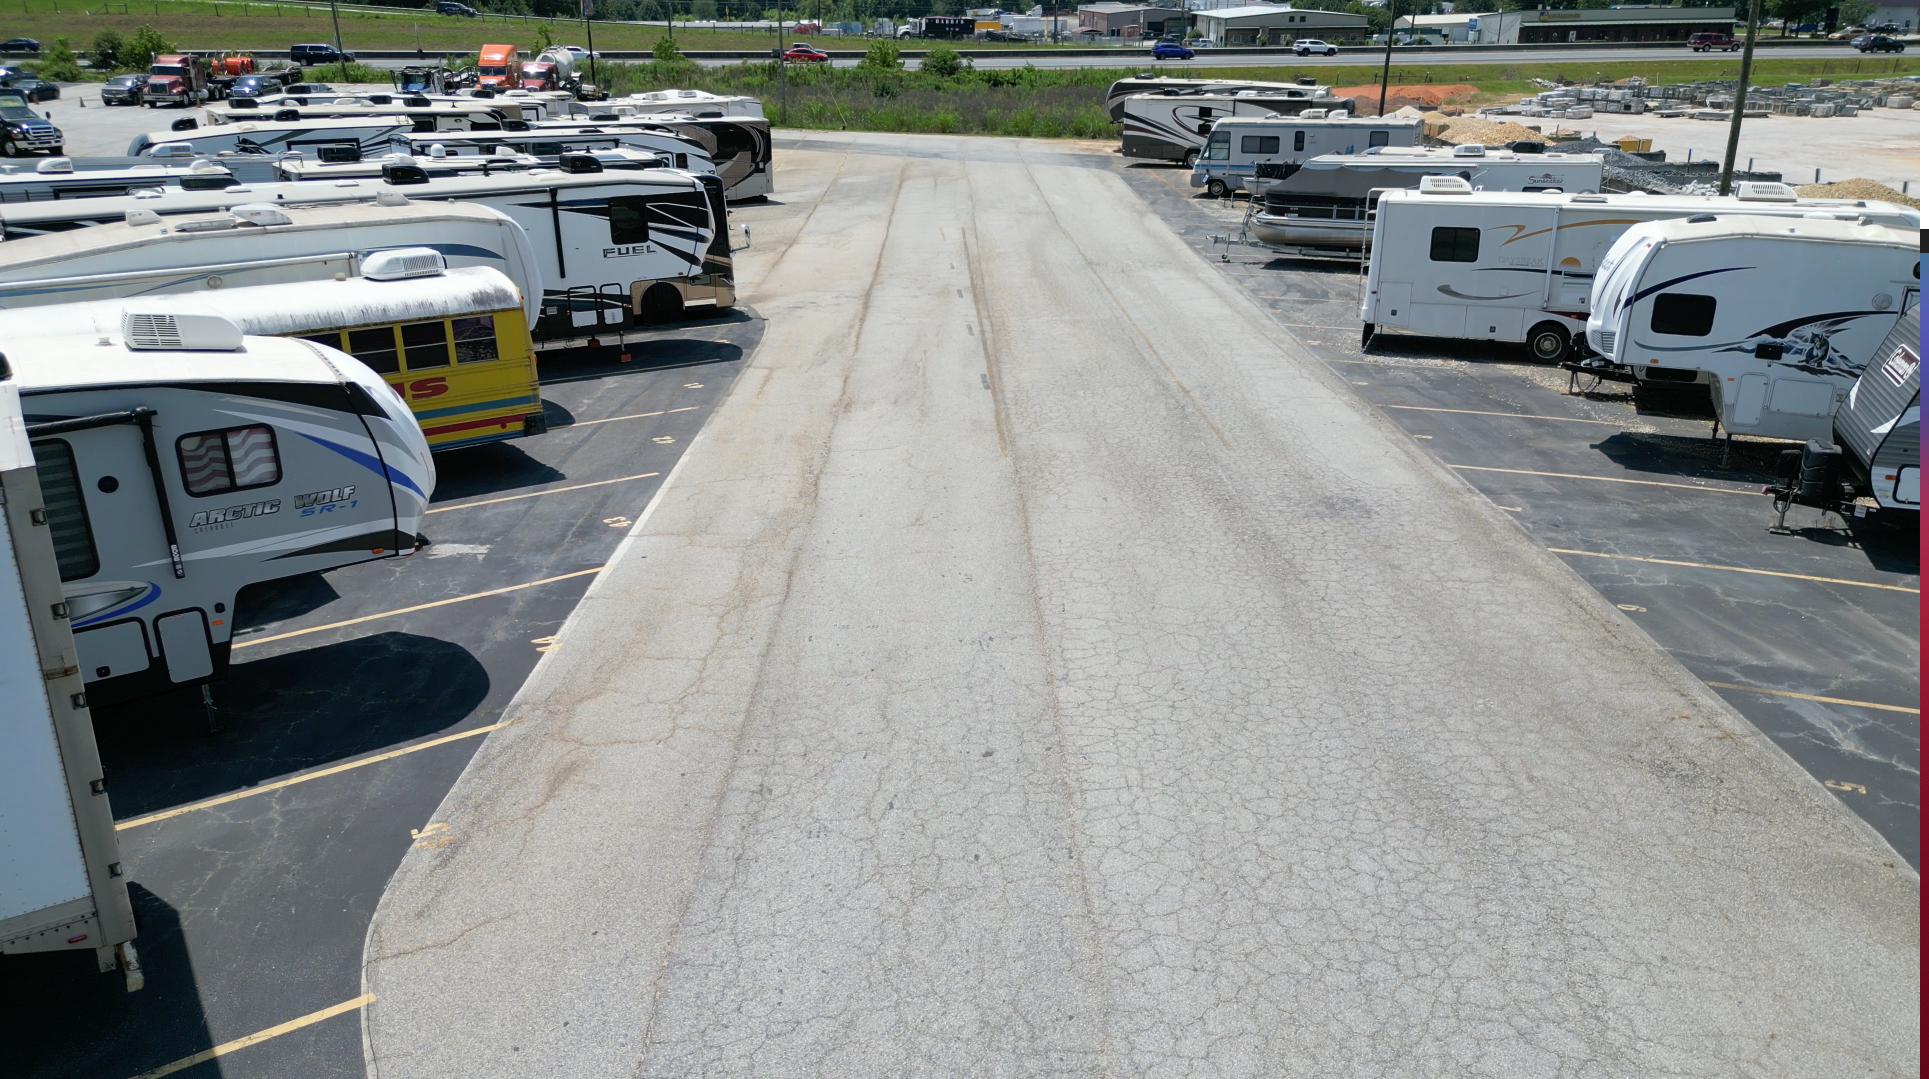 East Metro RV & Boat Storage in Covington, GA 30014, RV and Truck parking